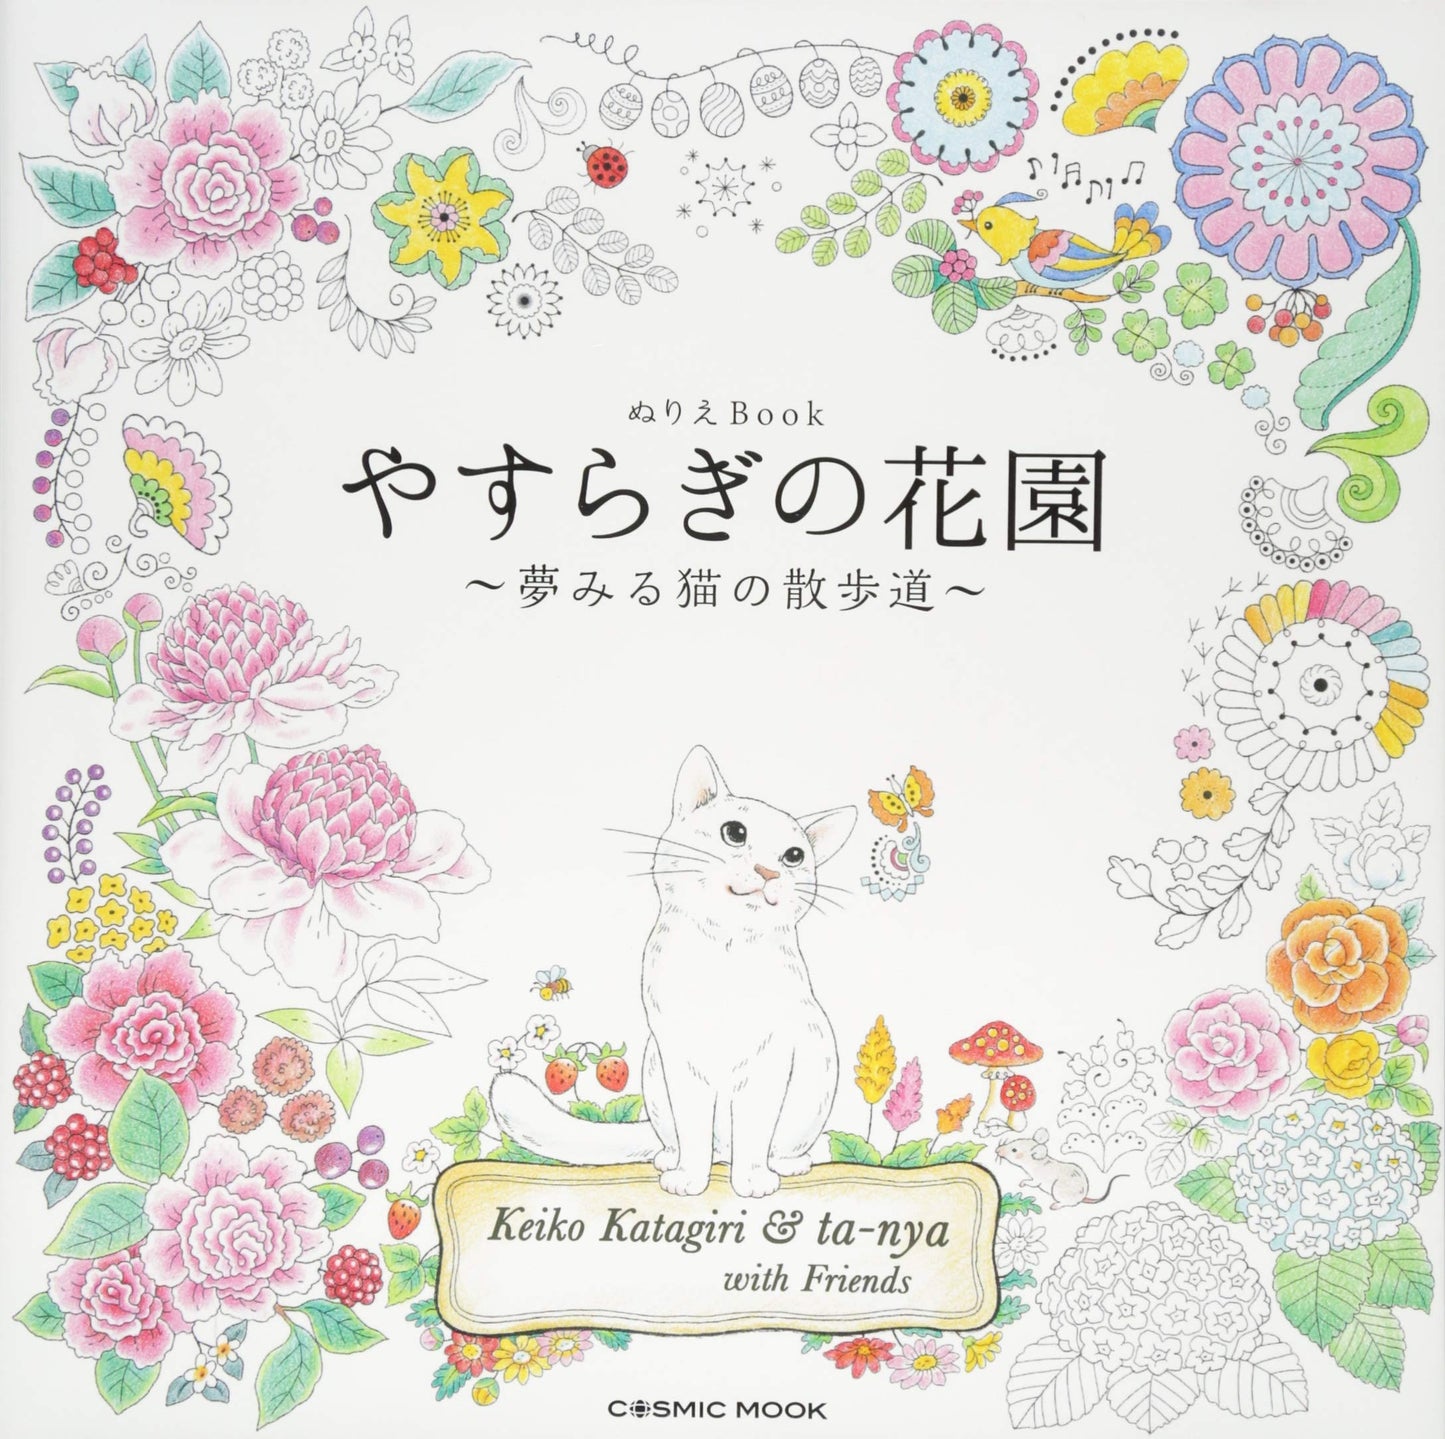 Yasuragi no Garden - Dreaming Cat Pathway Coloring Book, Keiko Katagiri & Ta-nya with Friends